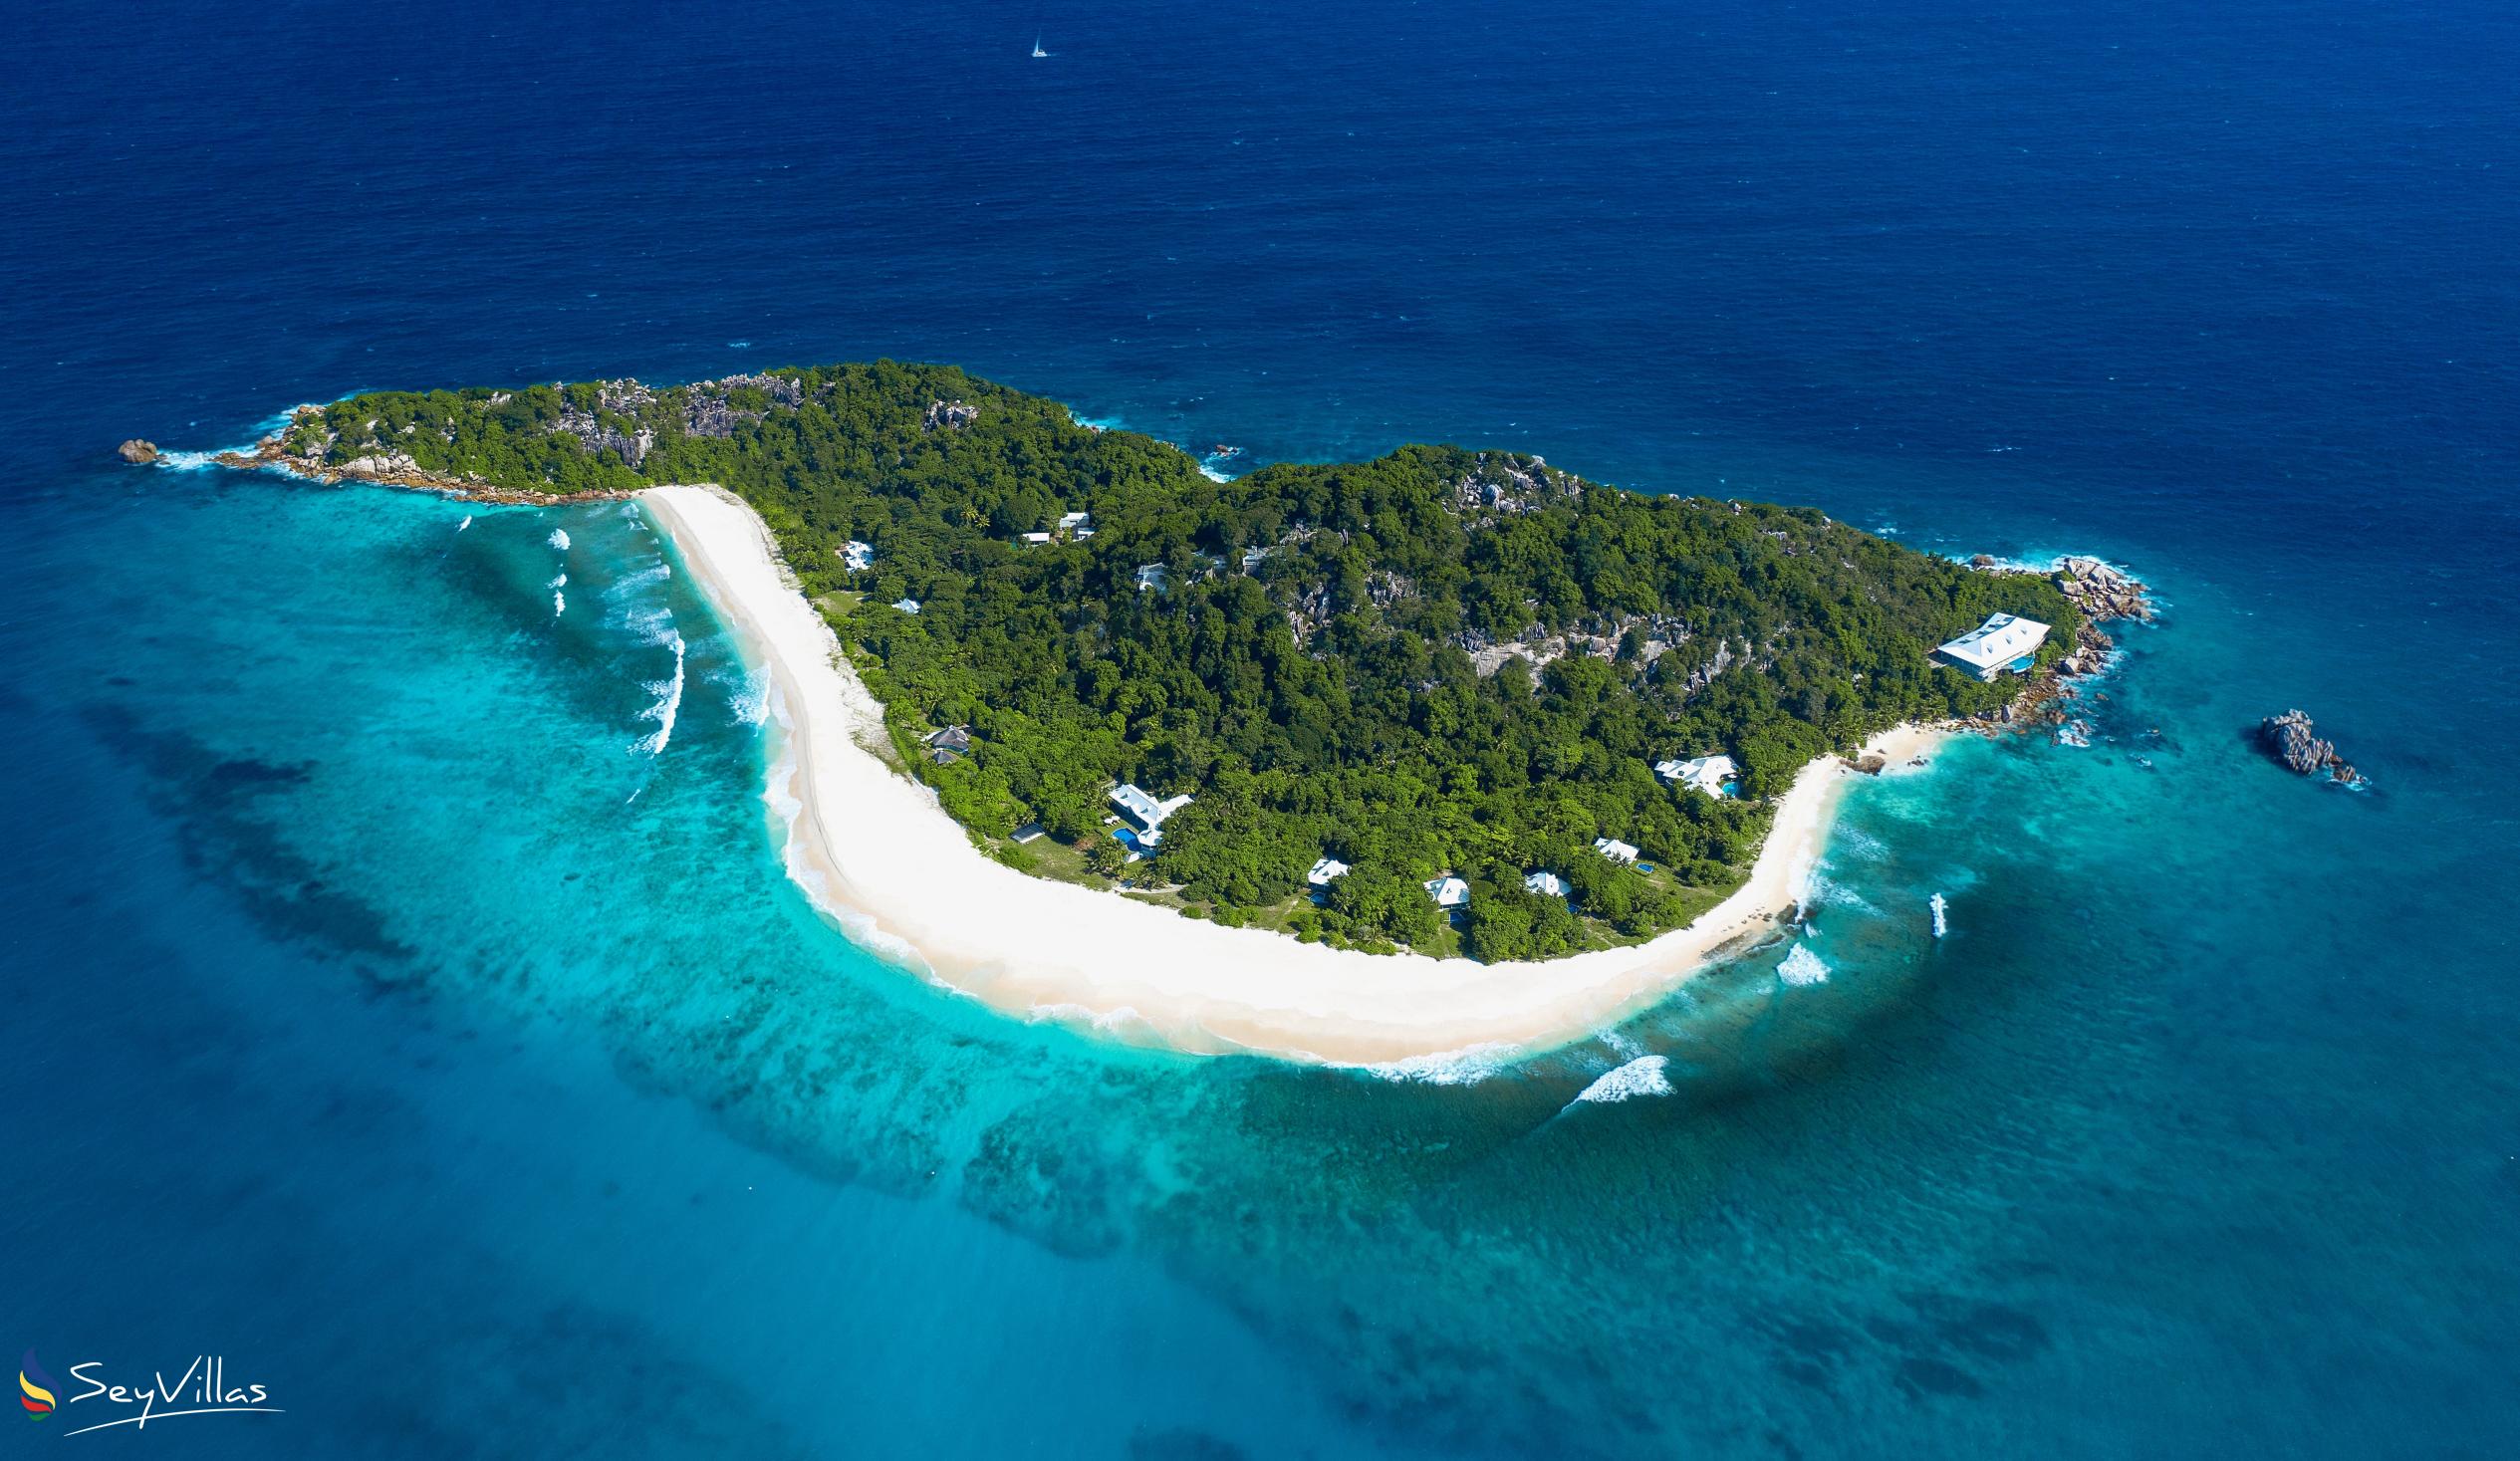 Photo 1: Cousine Island Seychelles - Outdoor area - Cousine Island (Seychelles)